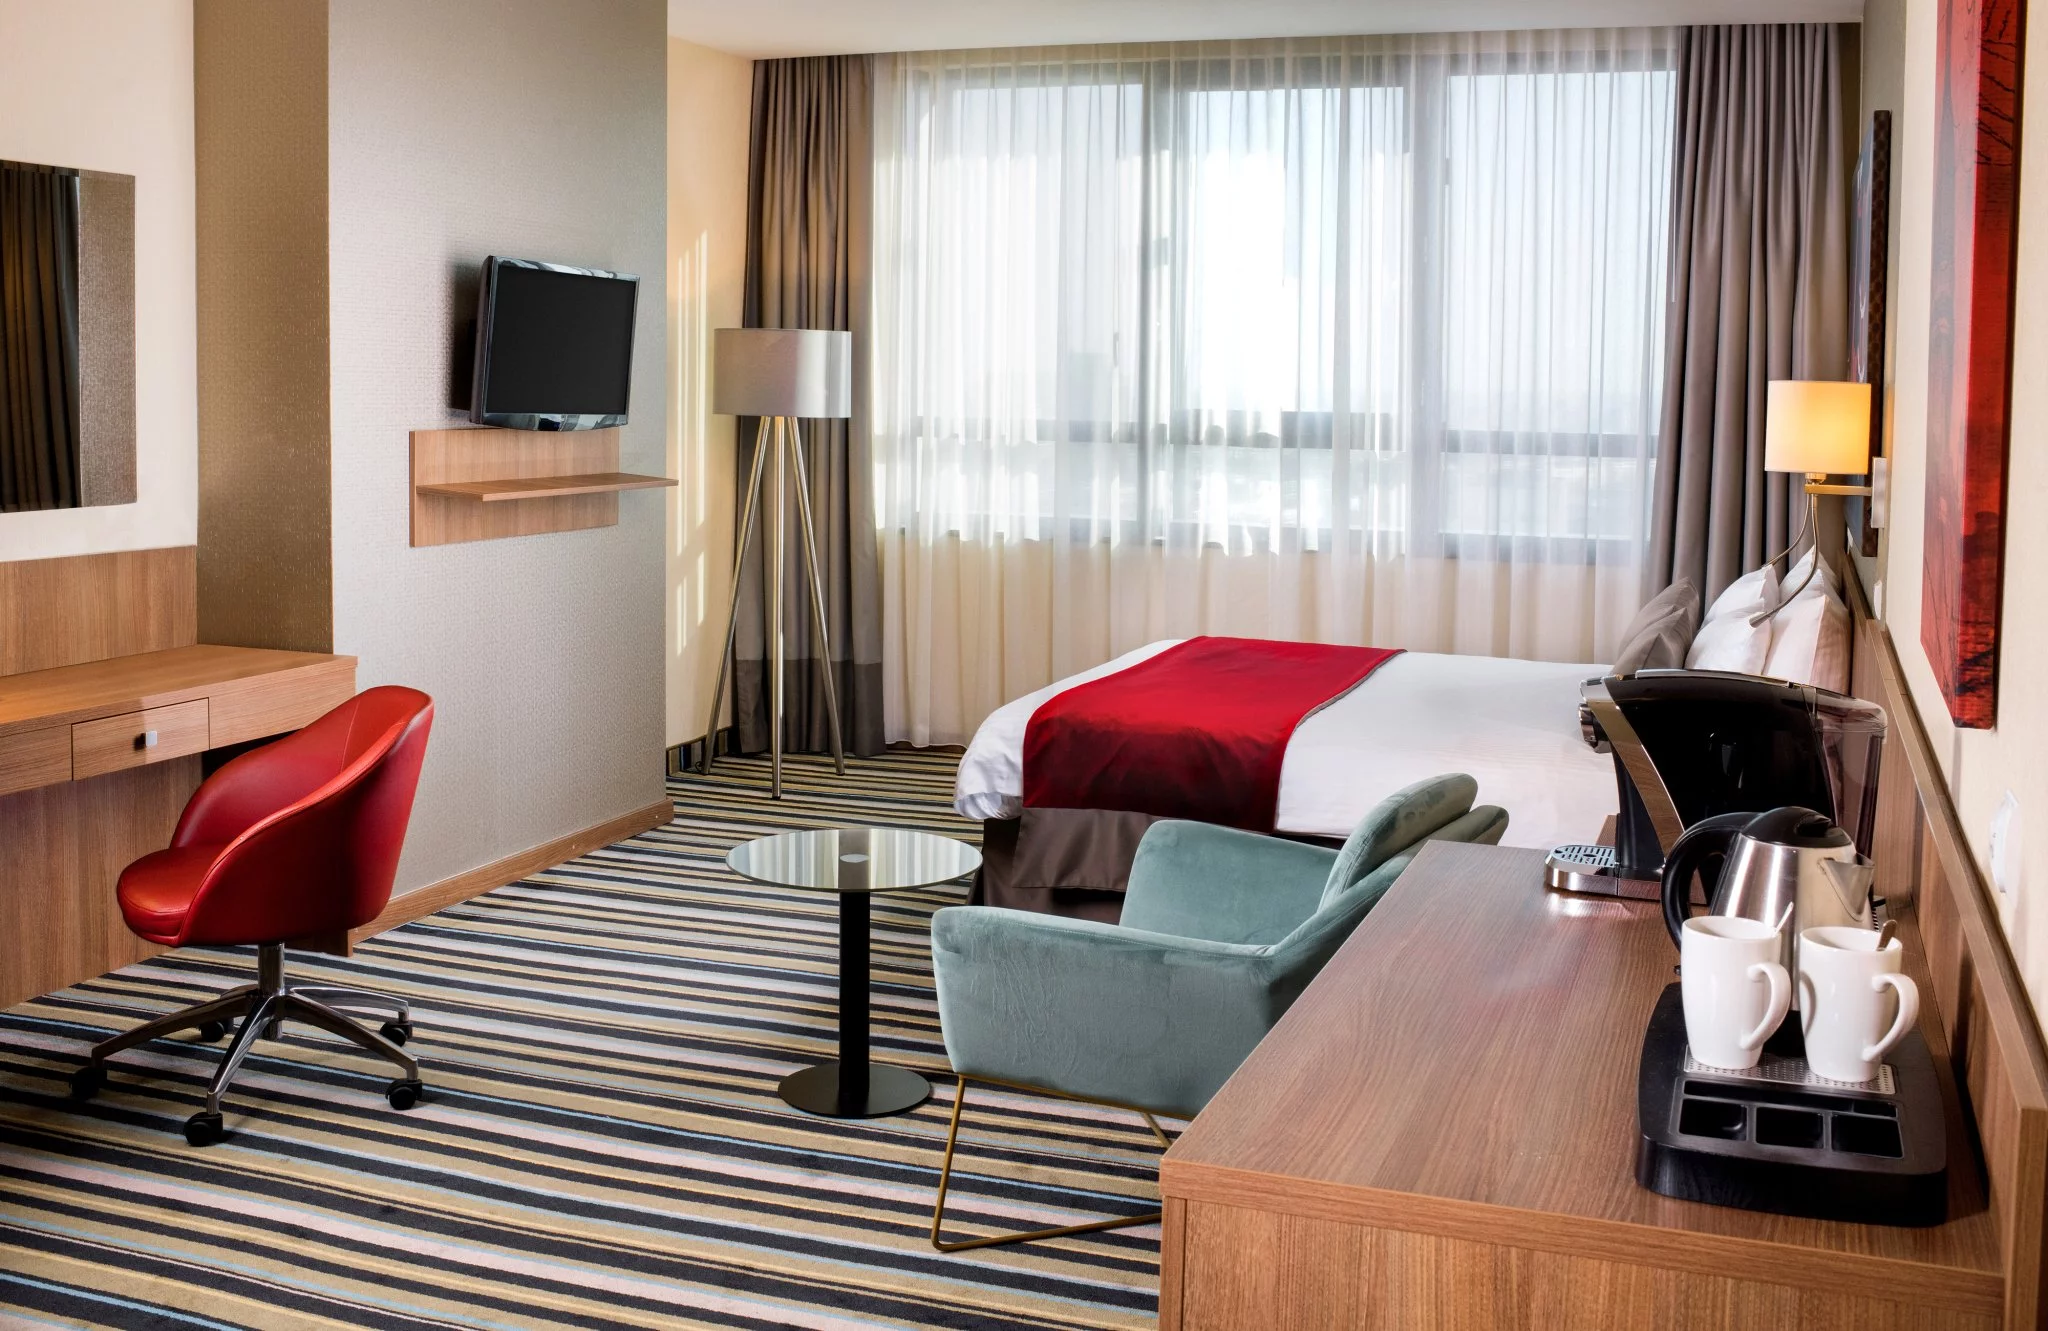 Leonardo Royal Hotel Warsaw - Comfort Room